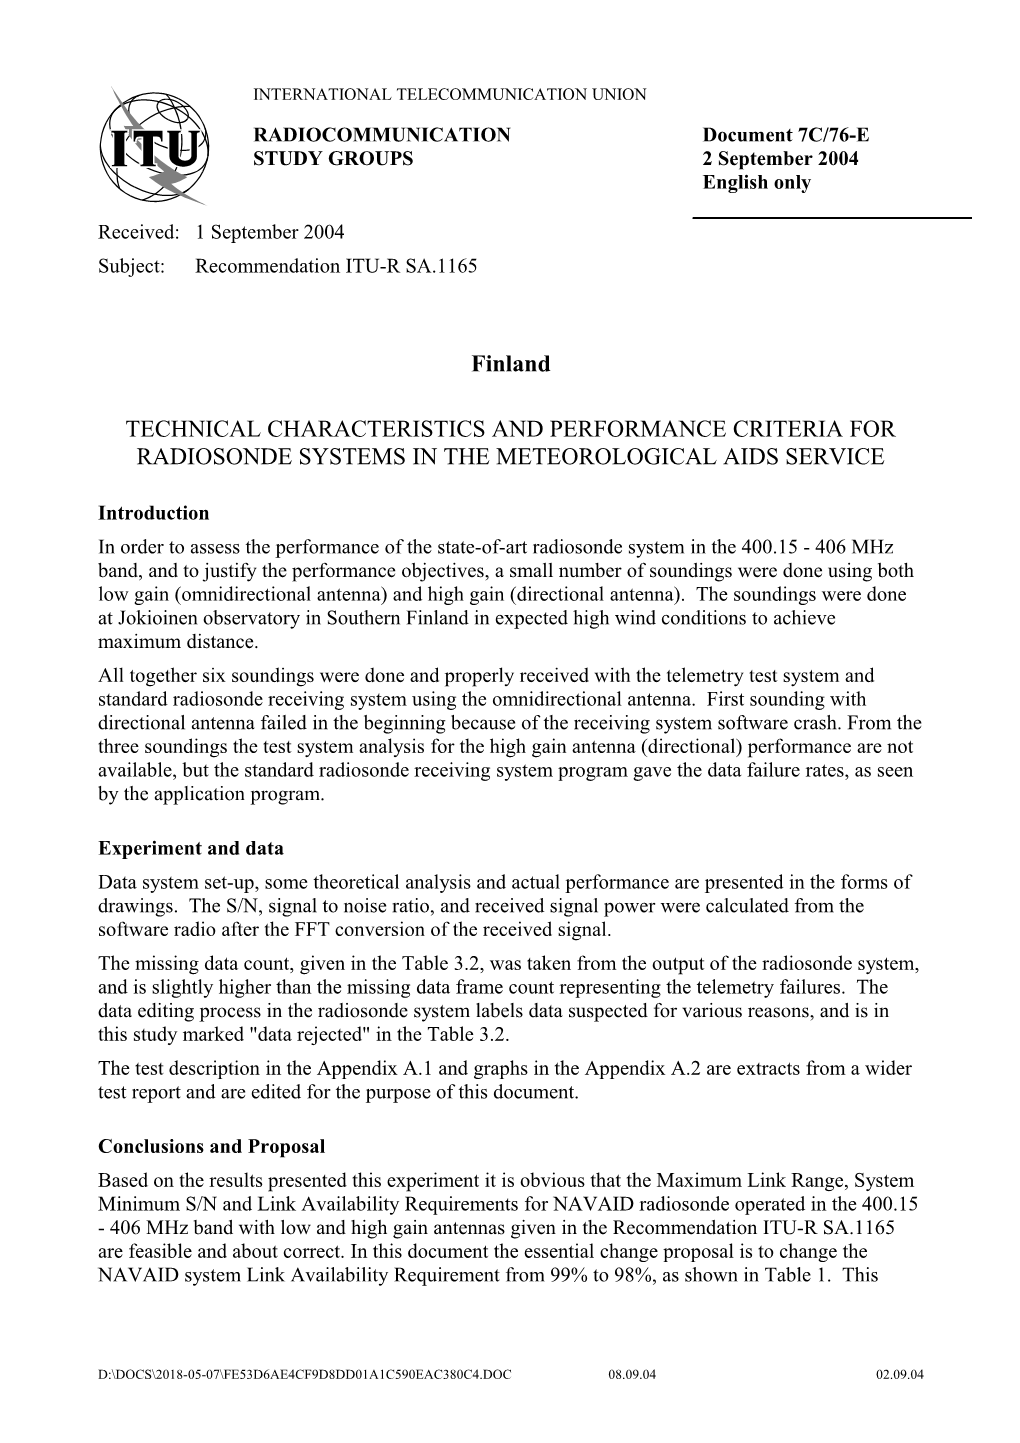 Subject: Recommendation ITU-R SA.1165